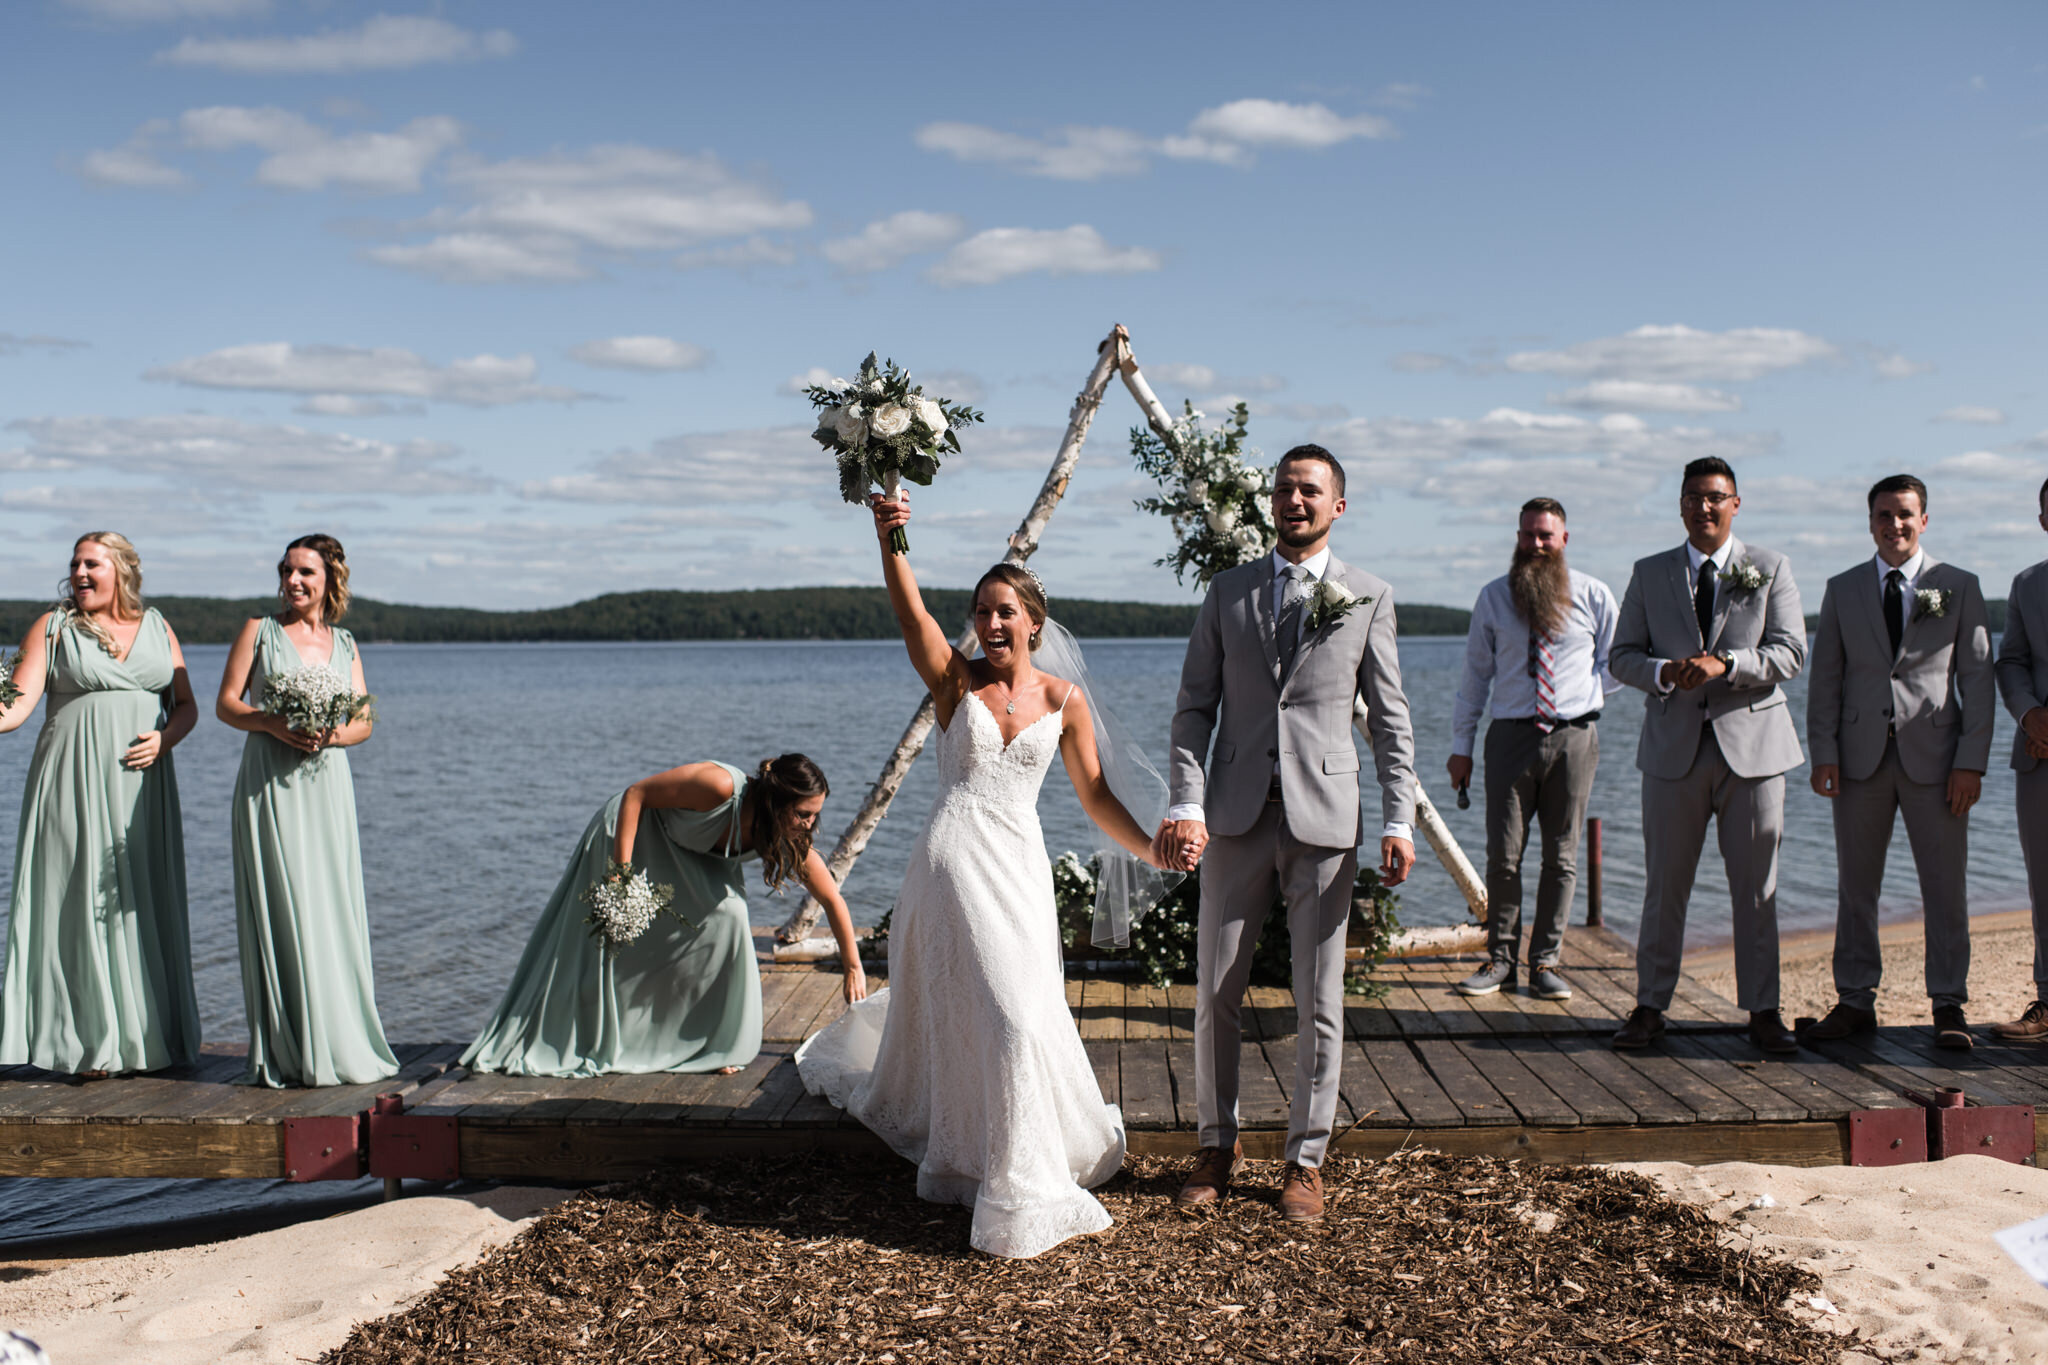 600-just-married-bride-groom-outdoor-ceremony-by-lake-tent-ontario-toronto-photos.jpg